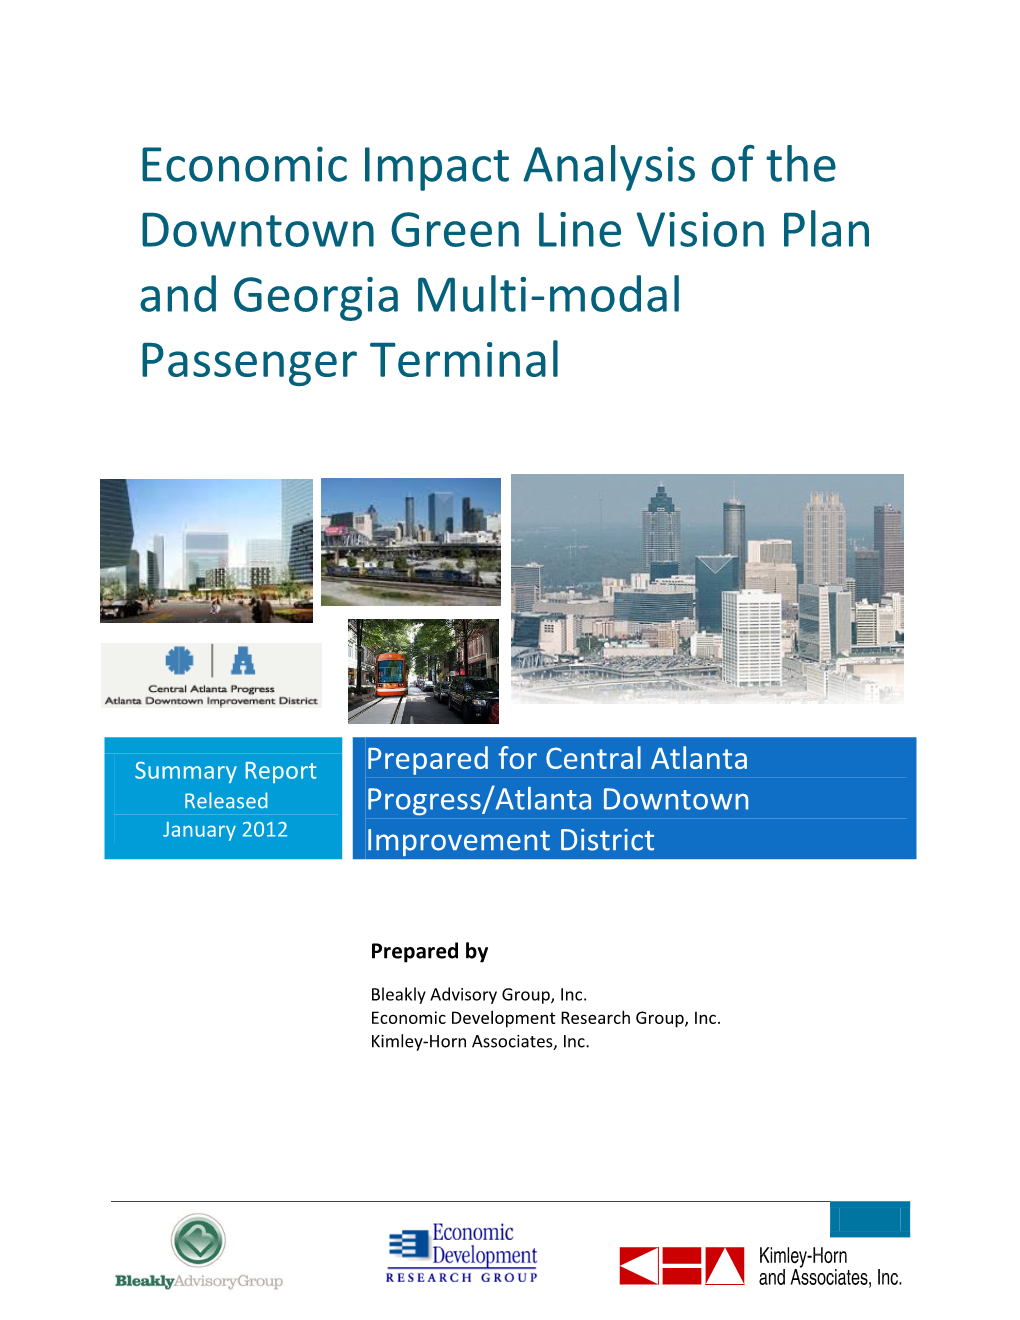 Economic Impact Analysis of the Downtown Green Line Vision Plan and Georgia Multi-Modal Passenger Terminal